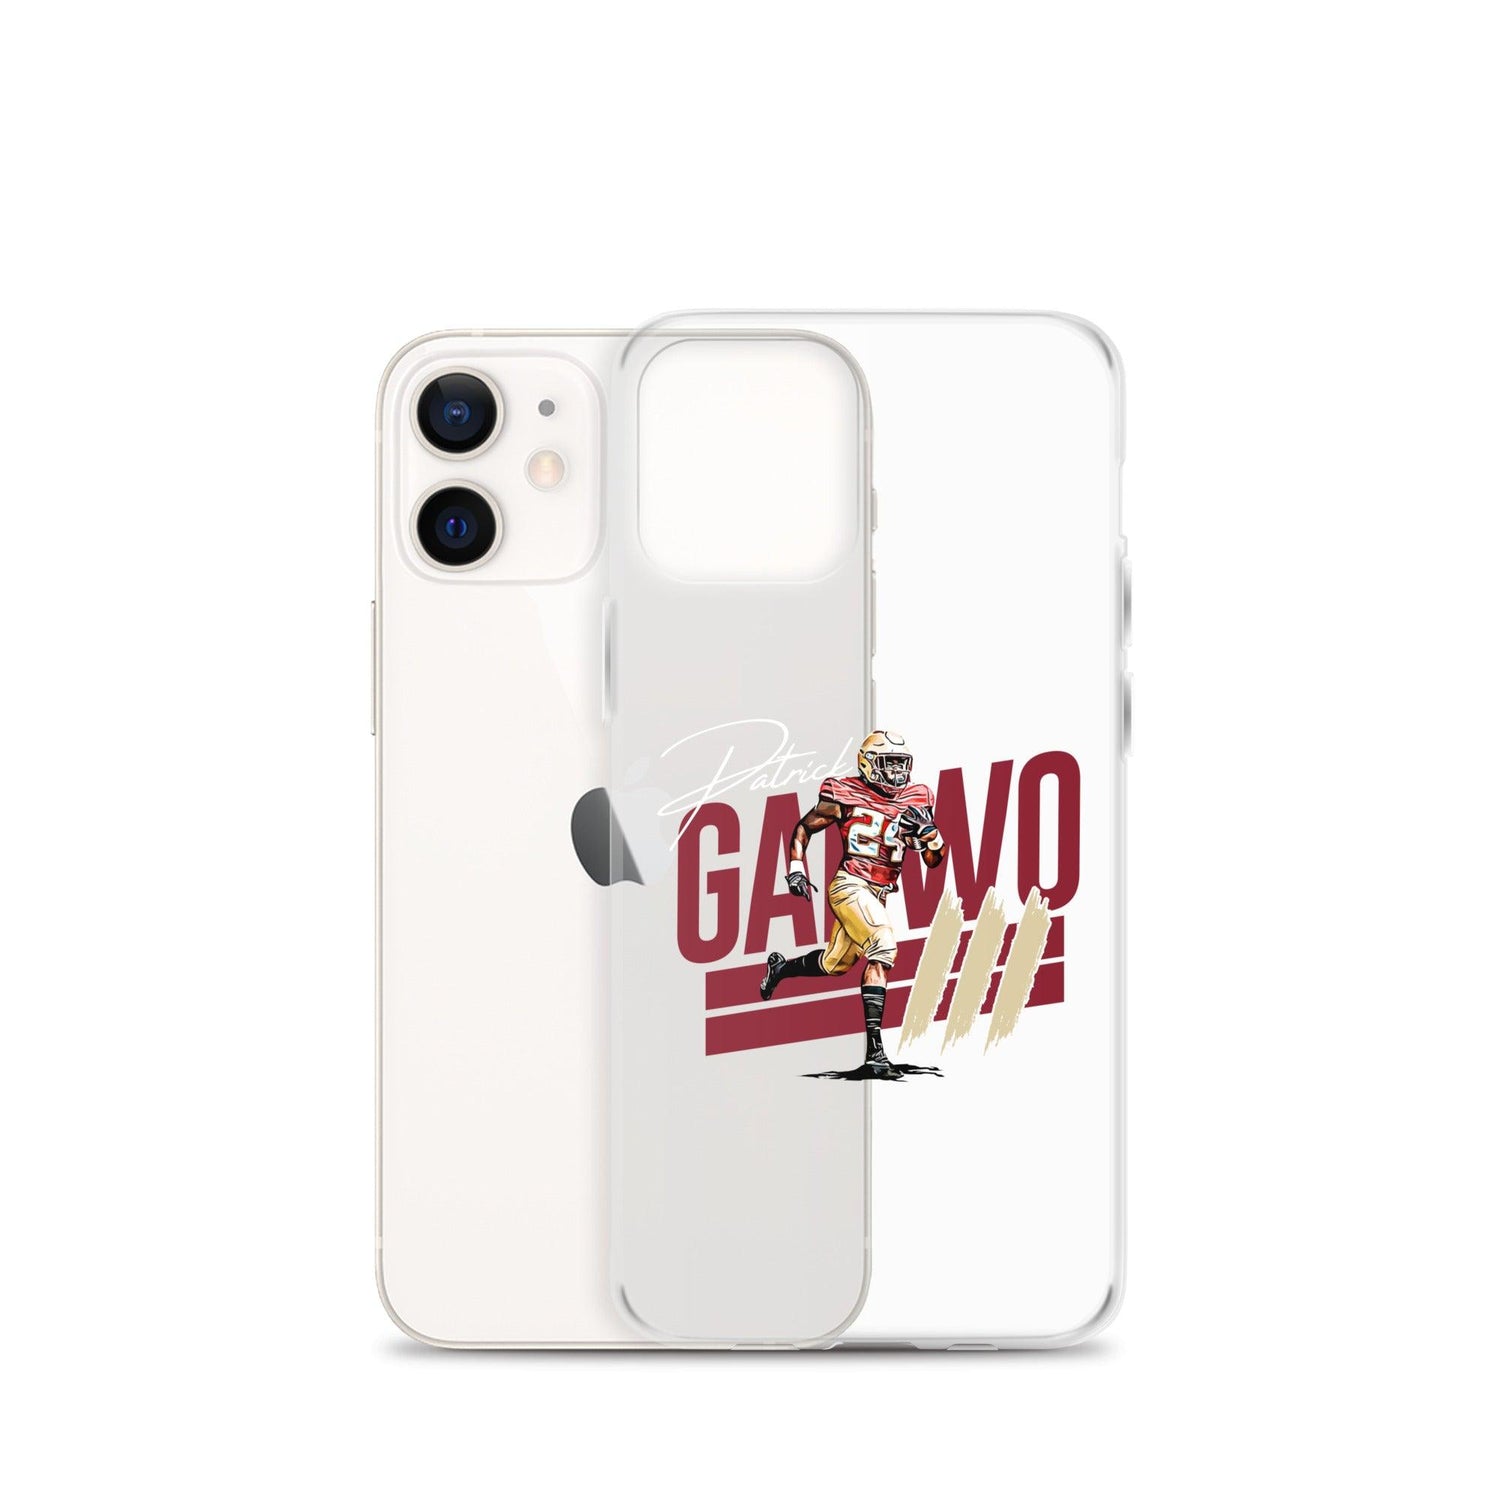 Patrick Garwo III “essential“ iPhone Case - Fan Arch